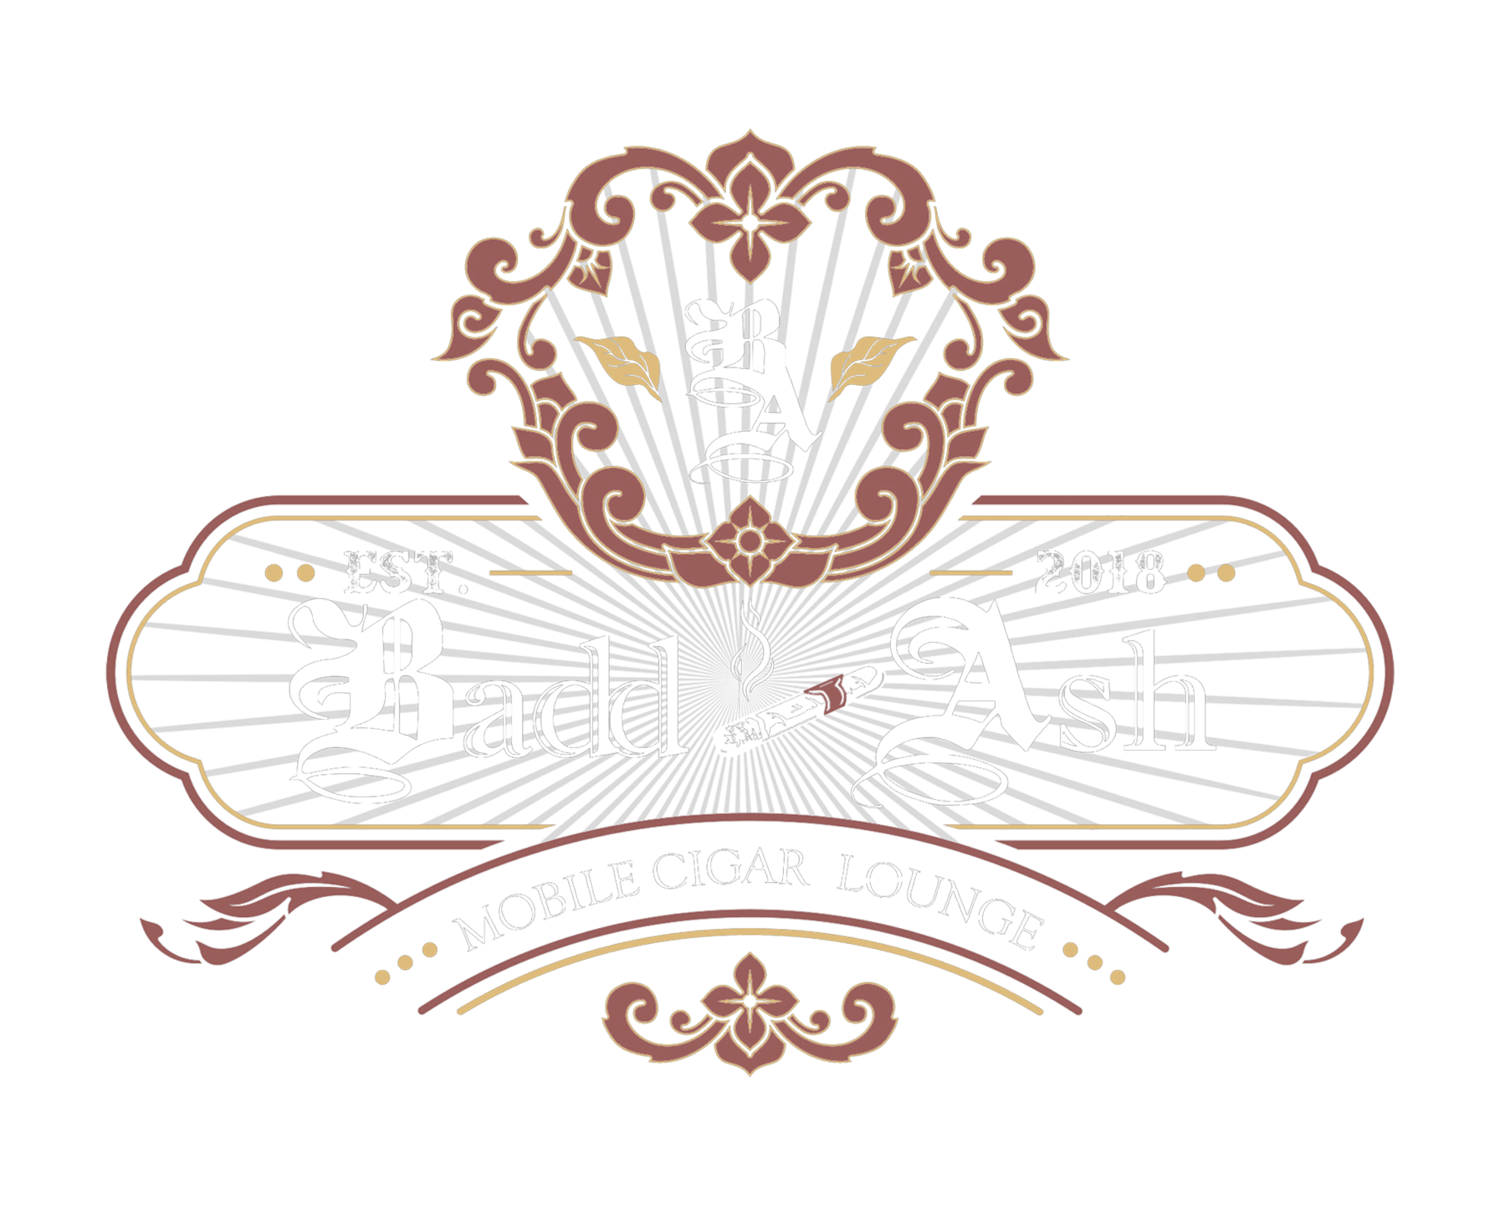 Badd Ash Mobile Cigar Lounge